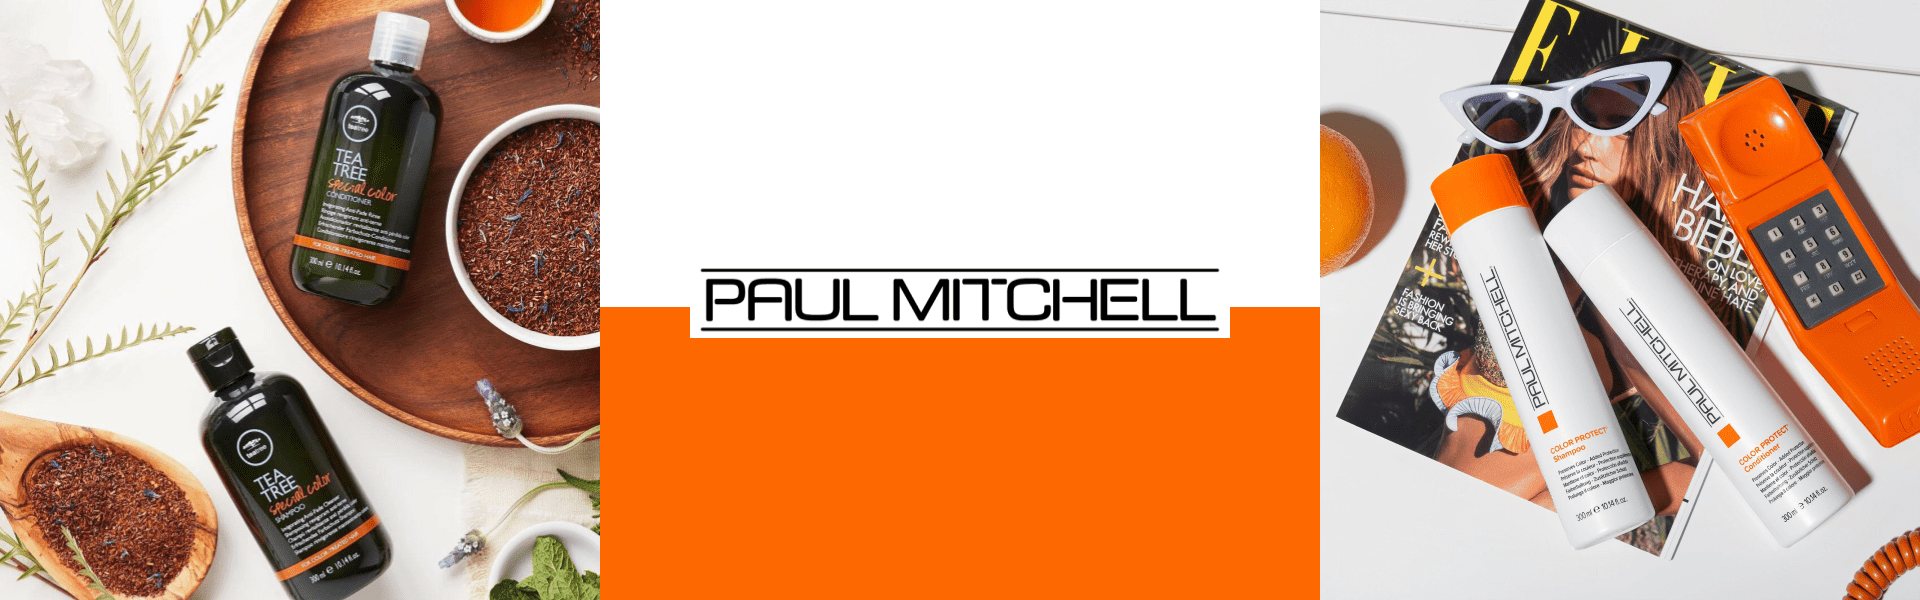 Paul Mitchell banner